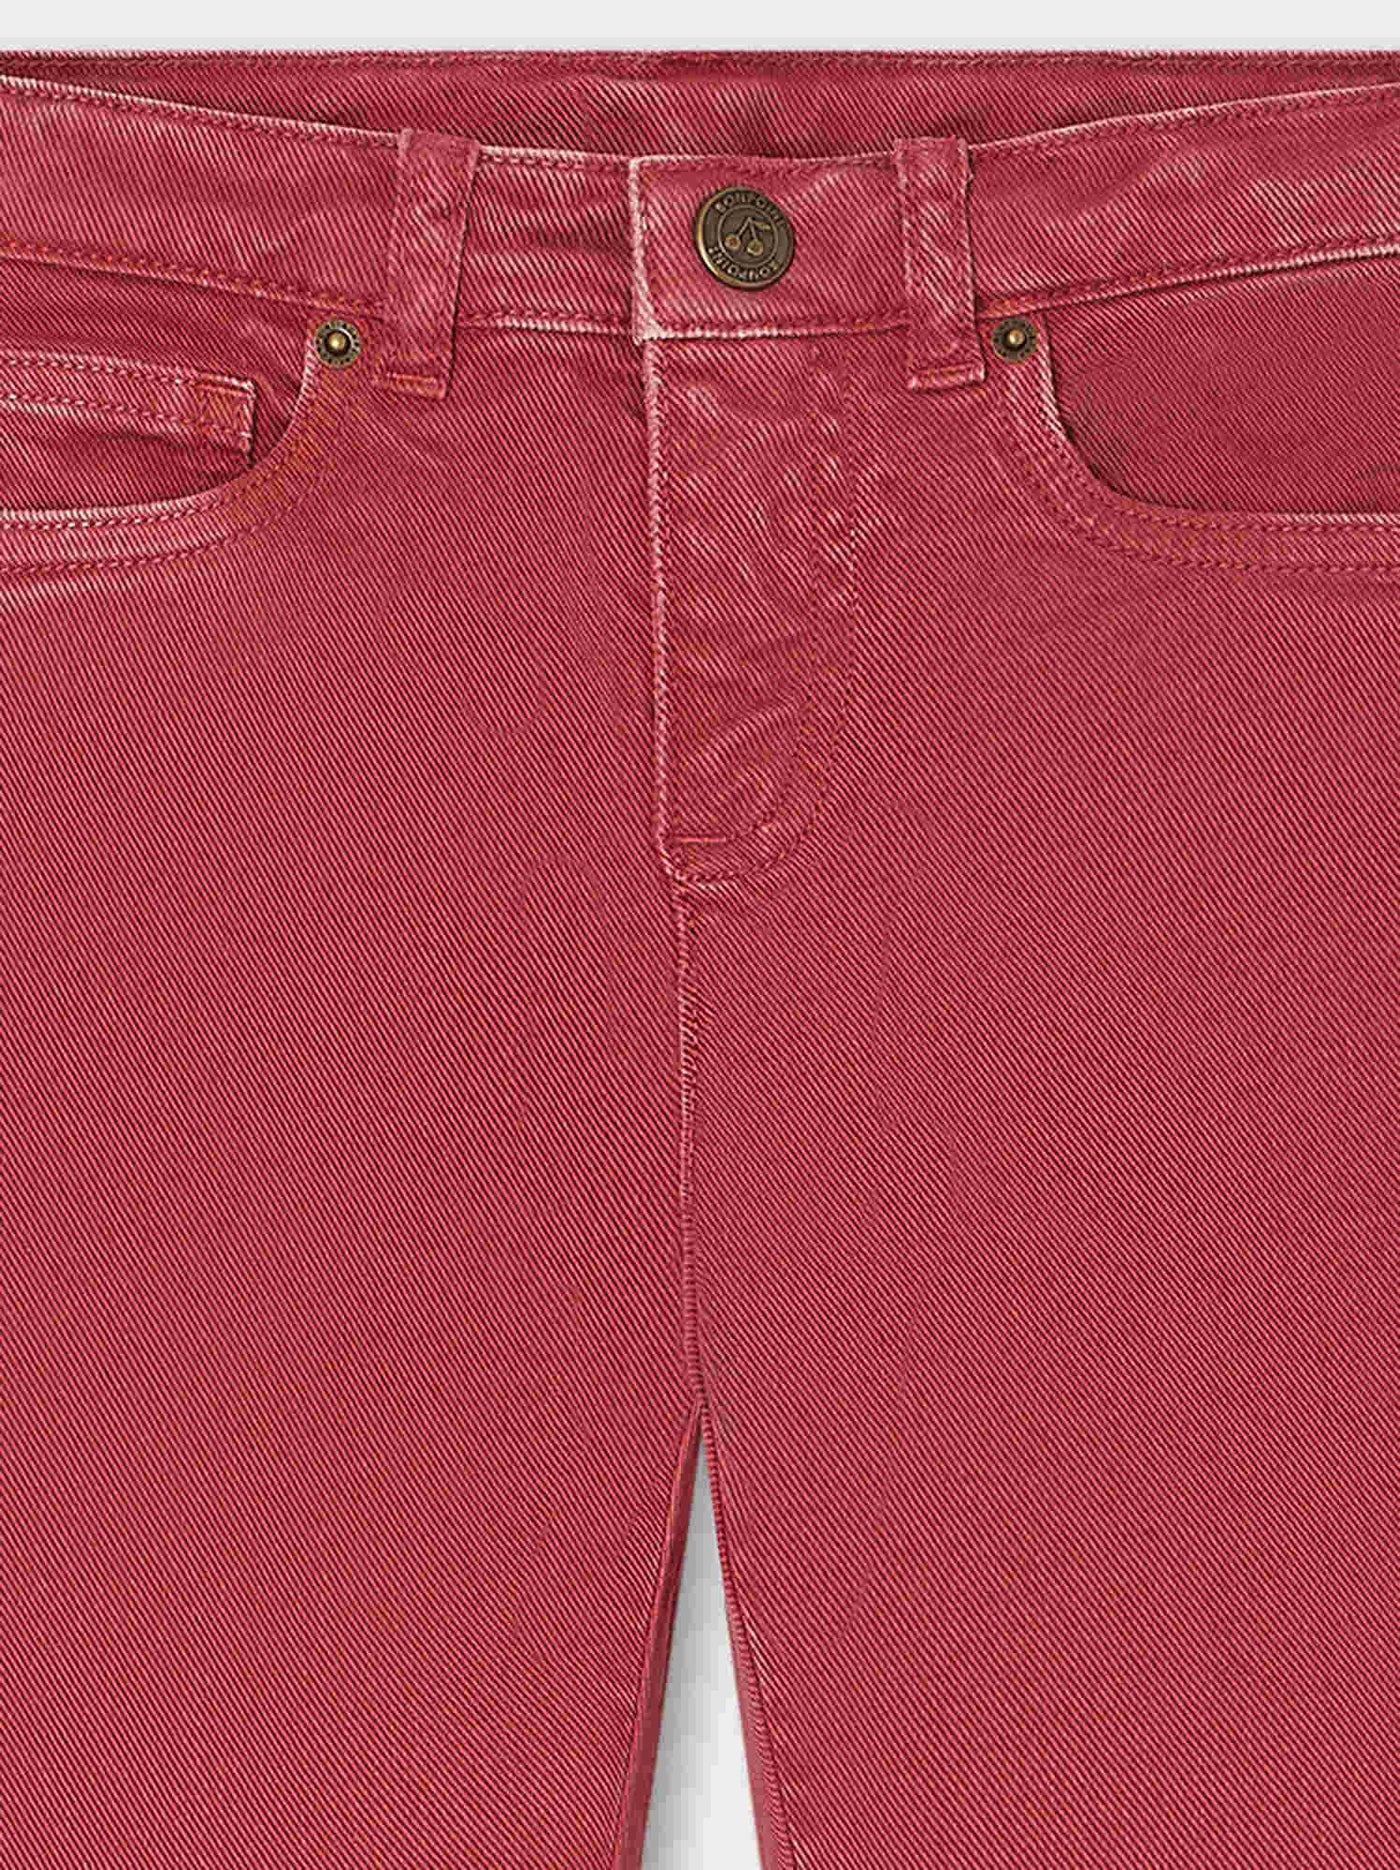 Pantalon Bonnie fraise